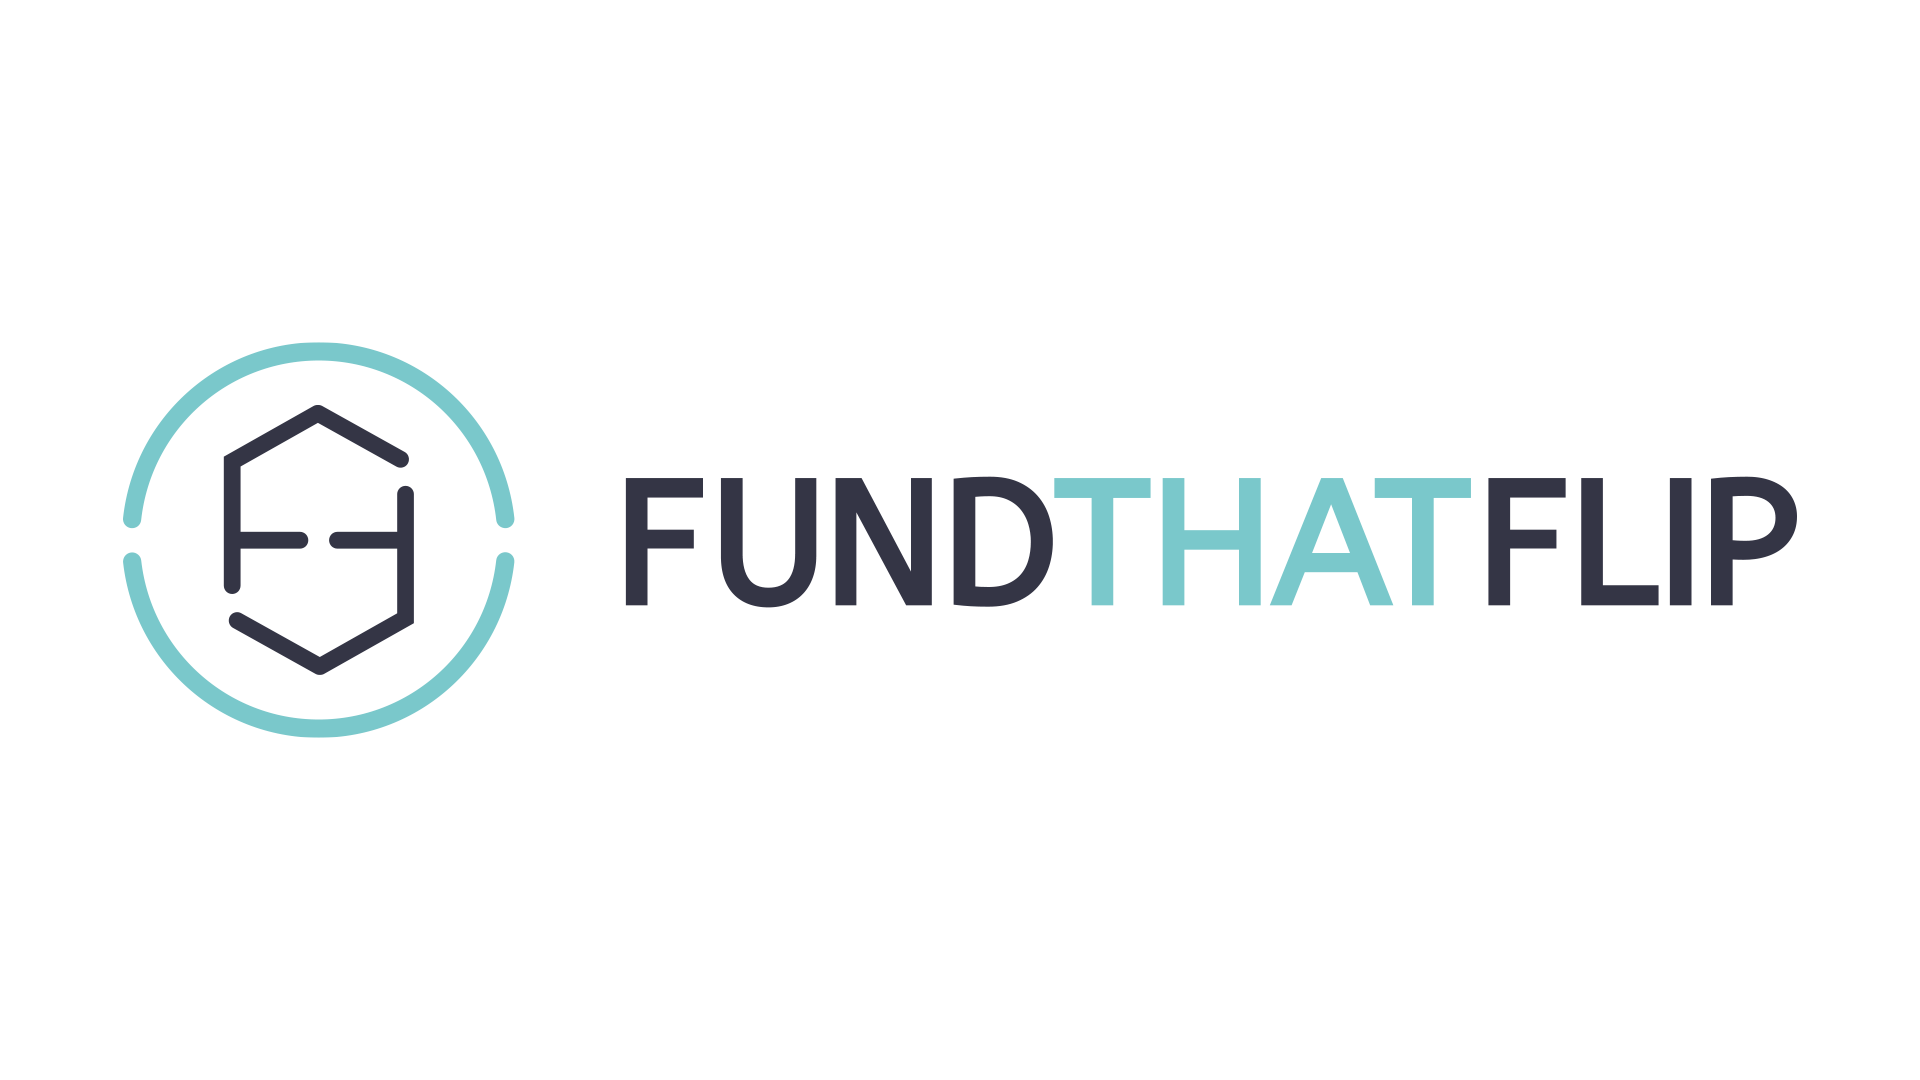 fundthatflip-logo light - transparent high res.png